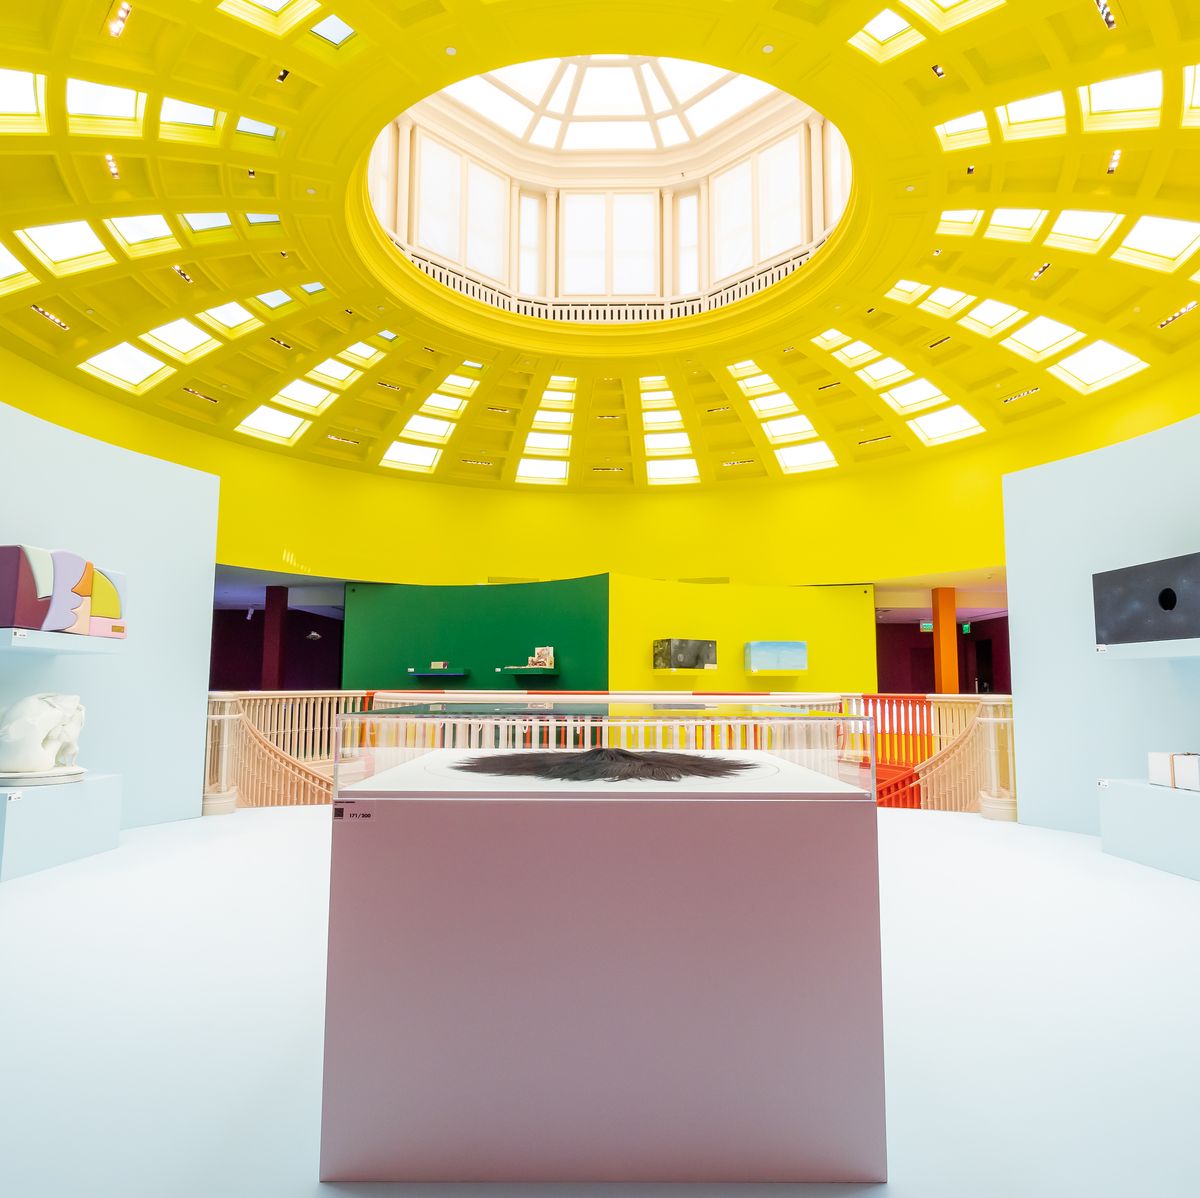 Louis Vuitton '200 Trunks, 200 Visionaries' Exhibit Opens In New York